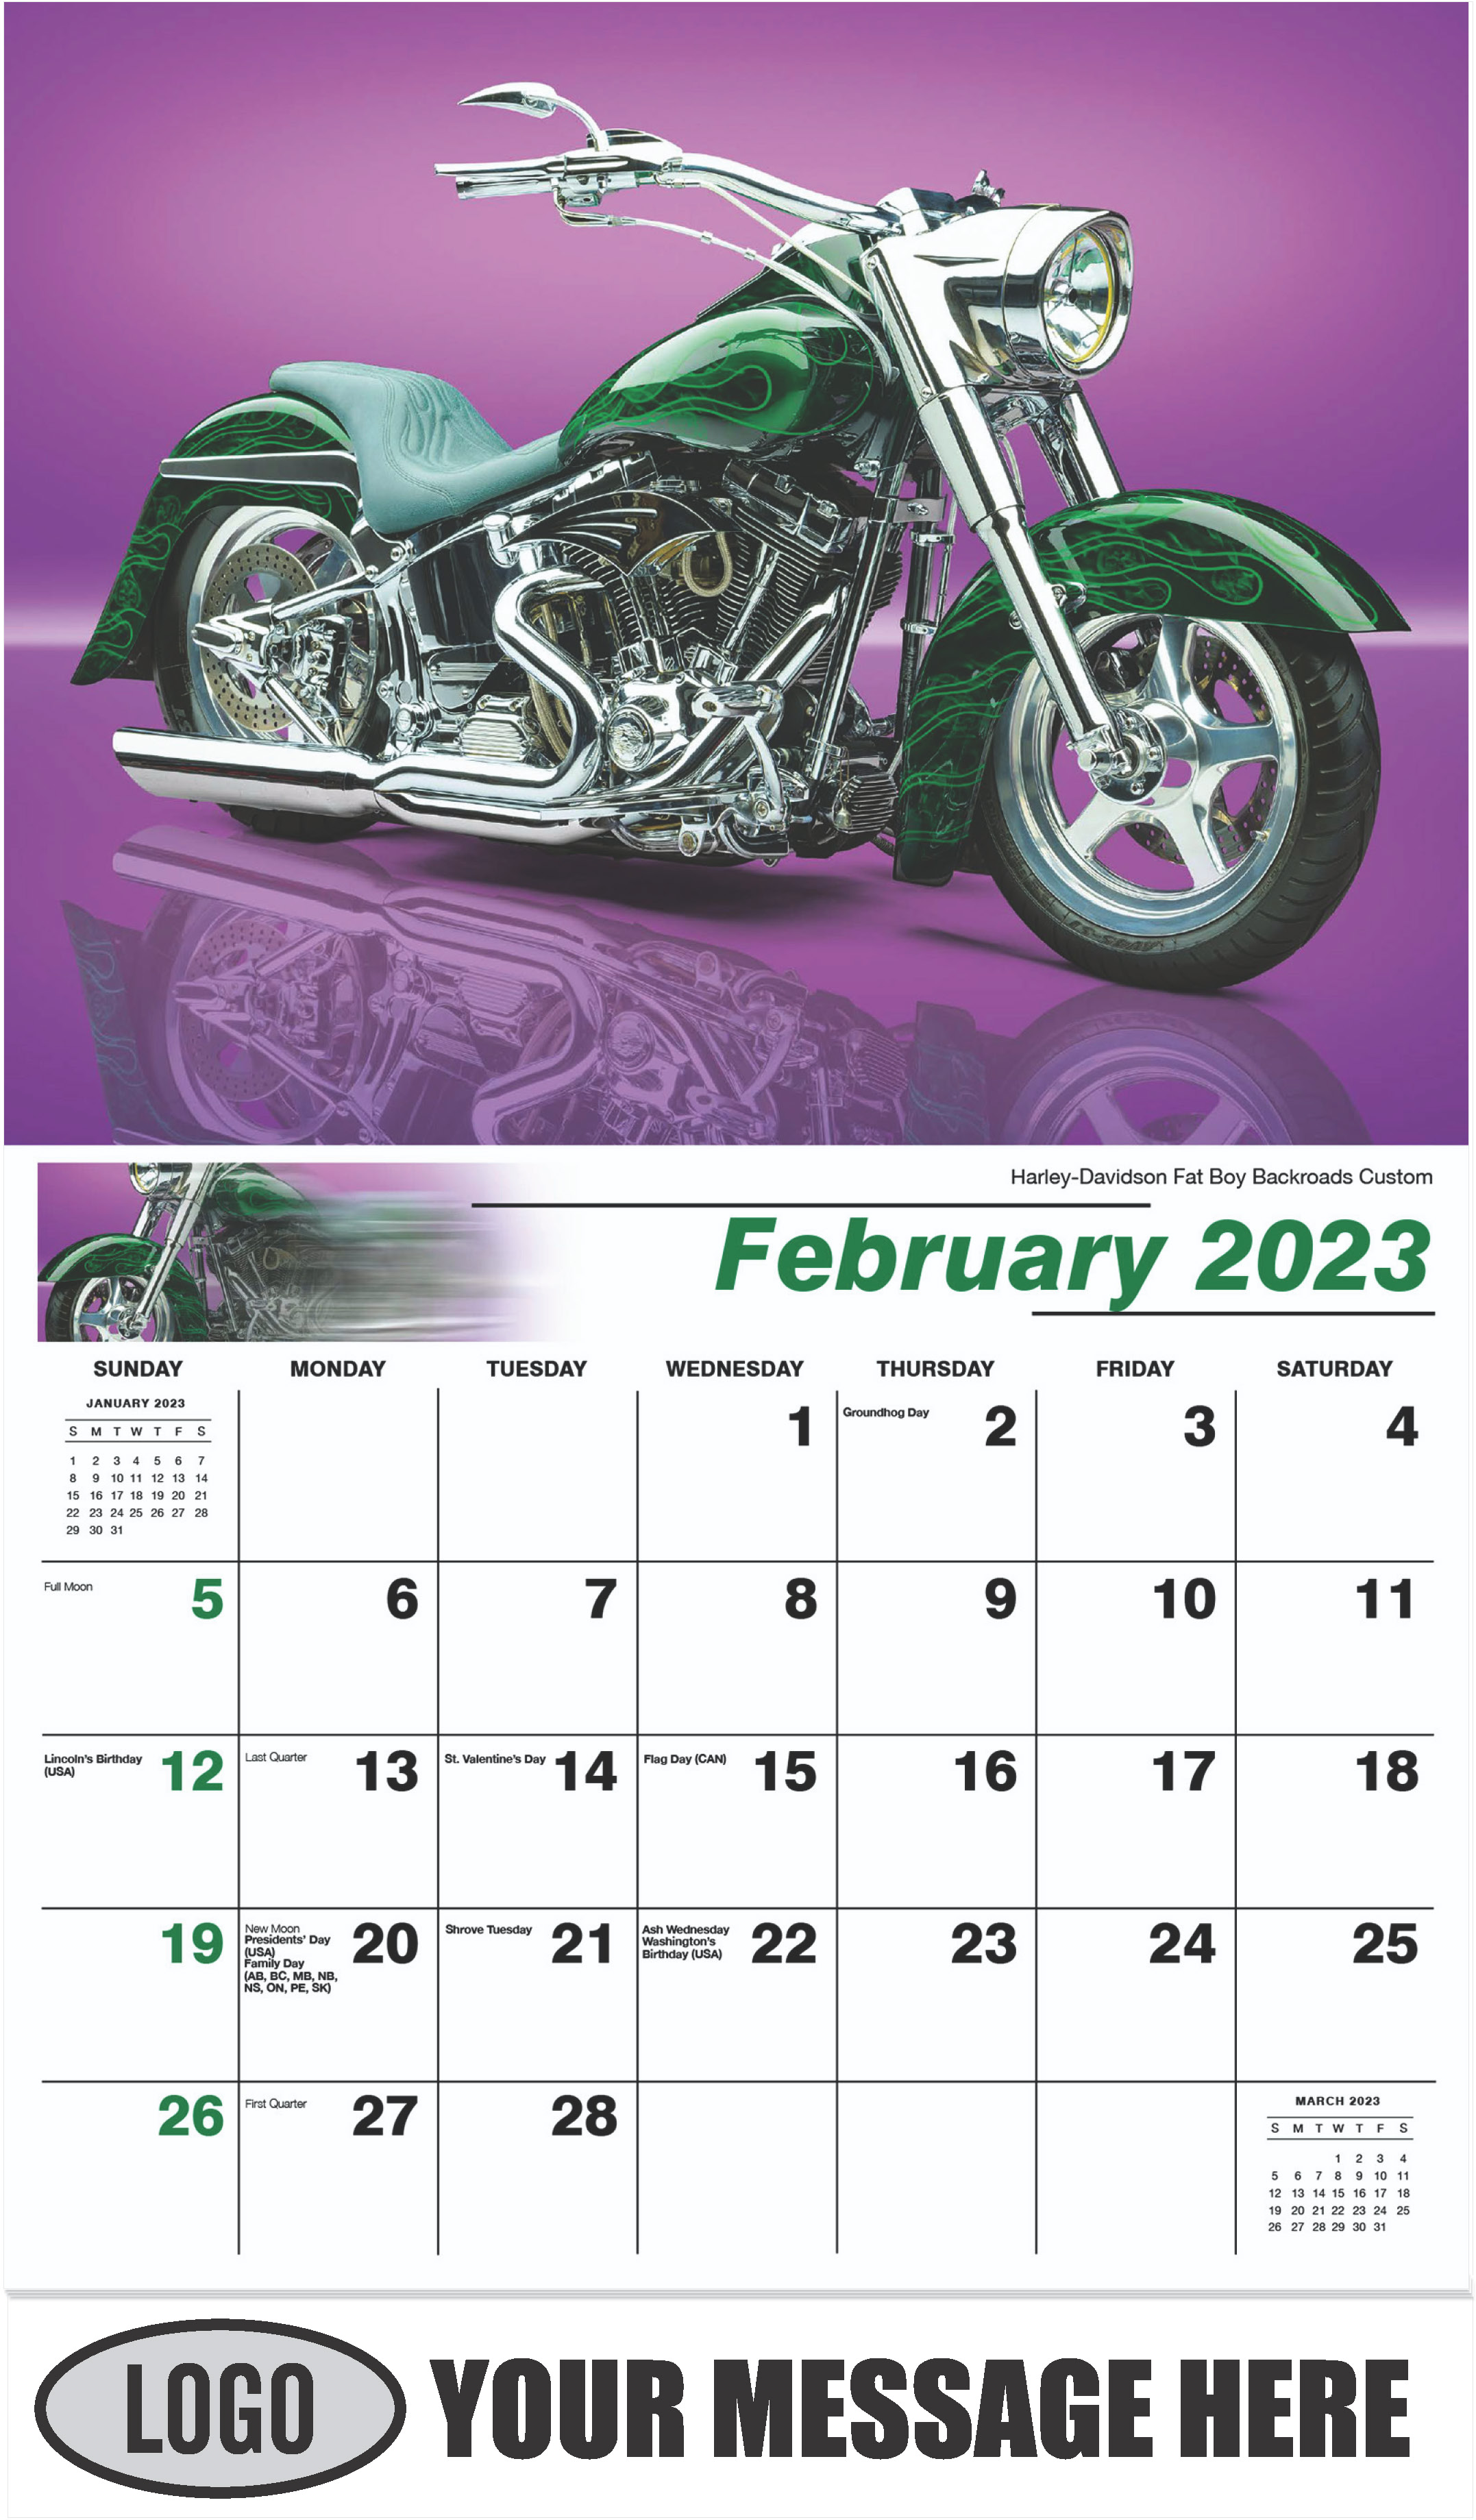 Harley-Davidson Fat Boy Backroads Custom - February - Motorcycle Mania 2023 Promotional Calendar